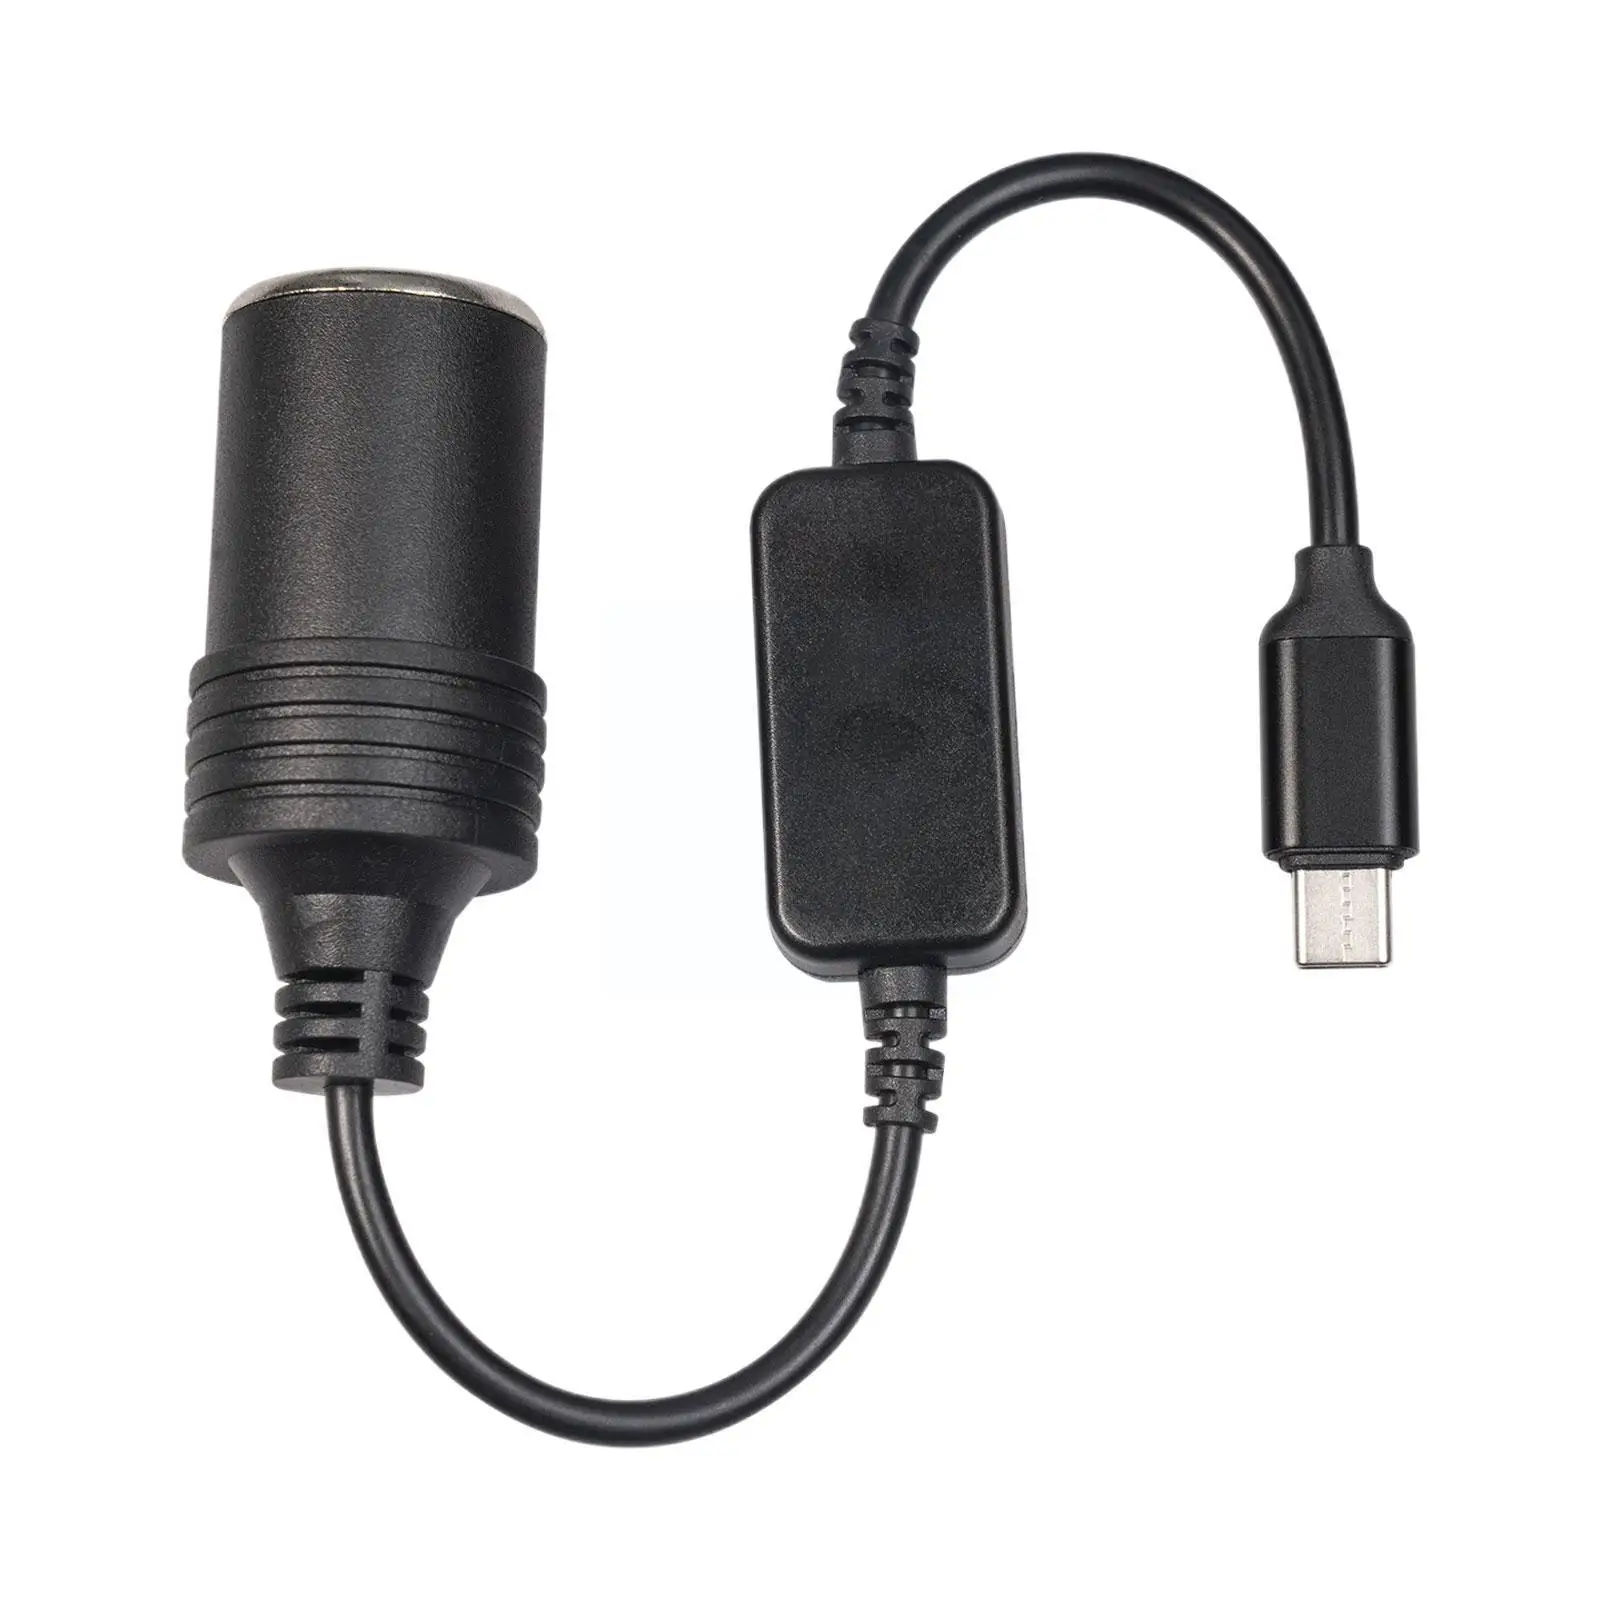 

USB C Type C to 12V Car Cigarette Lighter Socket Female Converter Adapter Cord for Car Cigarette Lighters Car Vacuum Cleane D2F8